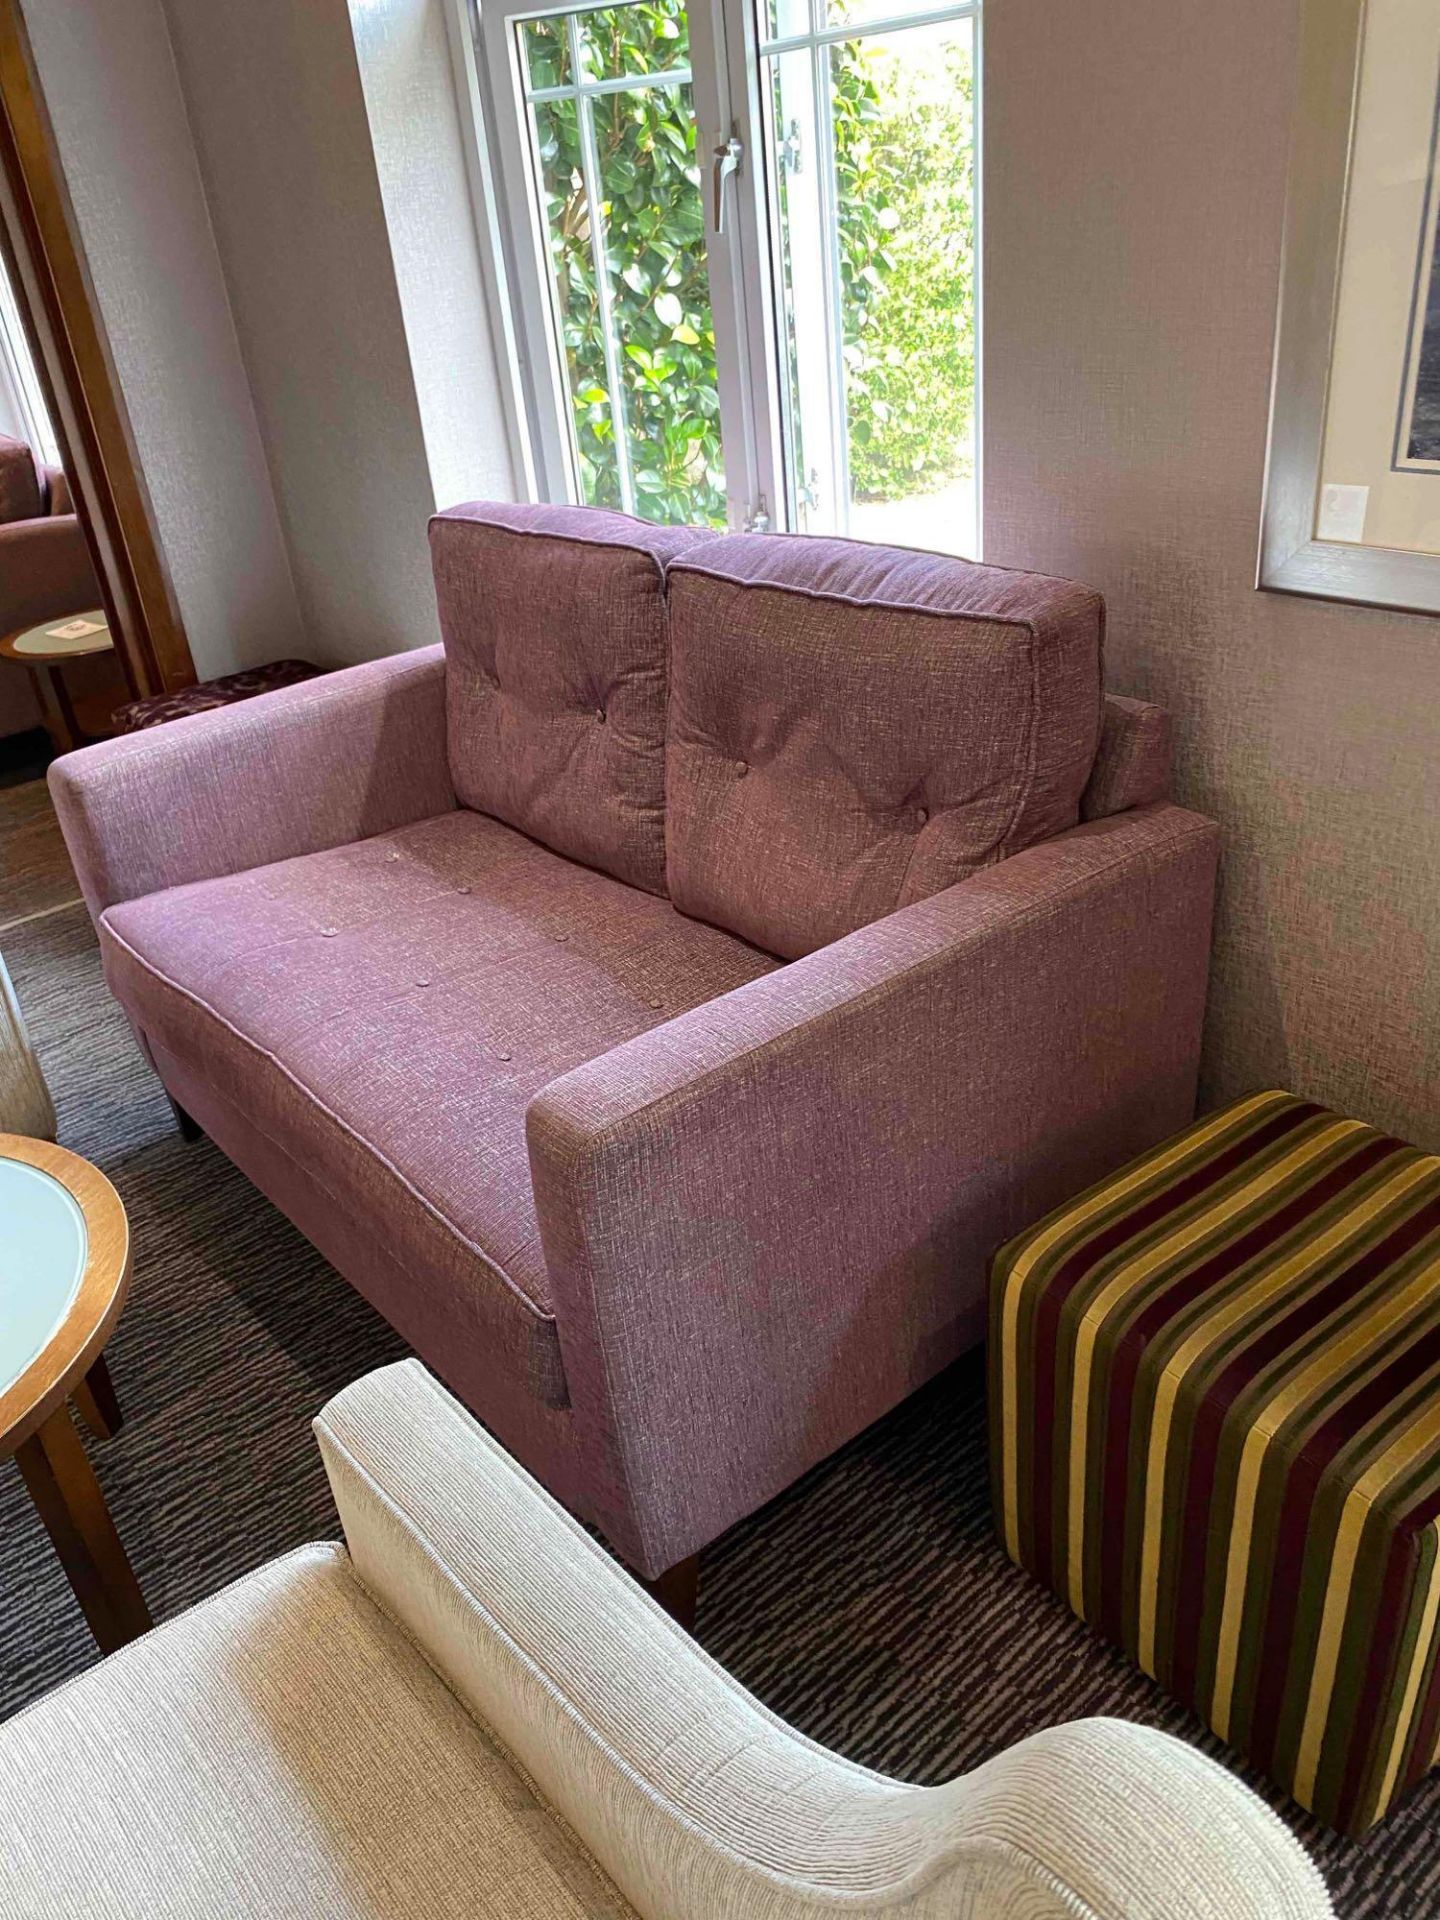 Bespoke Plumb Handmade Sofa By Smiths Of Romsey ( 2)950 x 1400 x 900 (The Lounge ) - Image 2 of 3